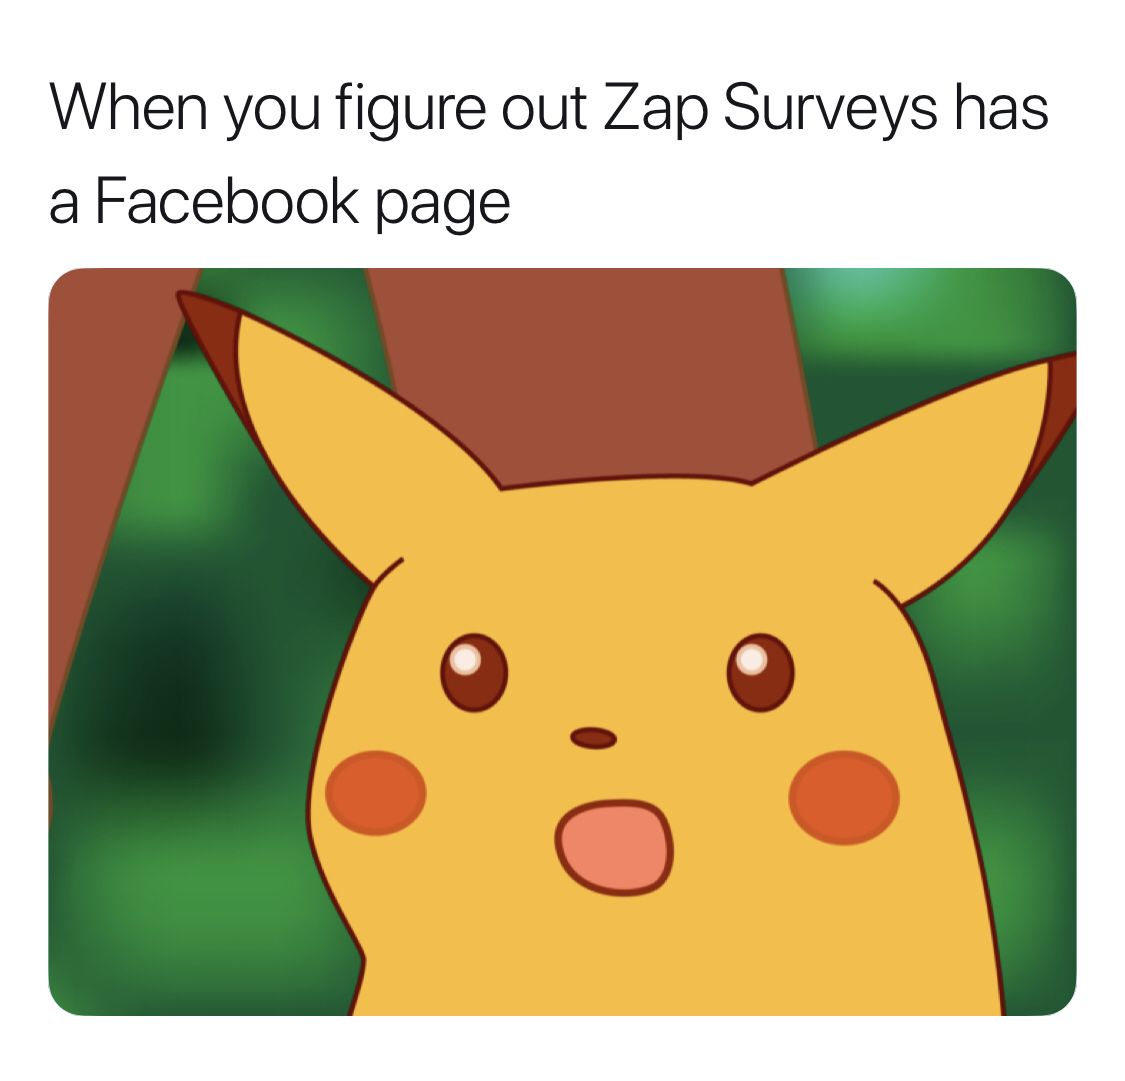 Zap Surveys Zapsurveysapp Twitter - 0 replies 0 retweets 0 likes